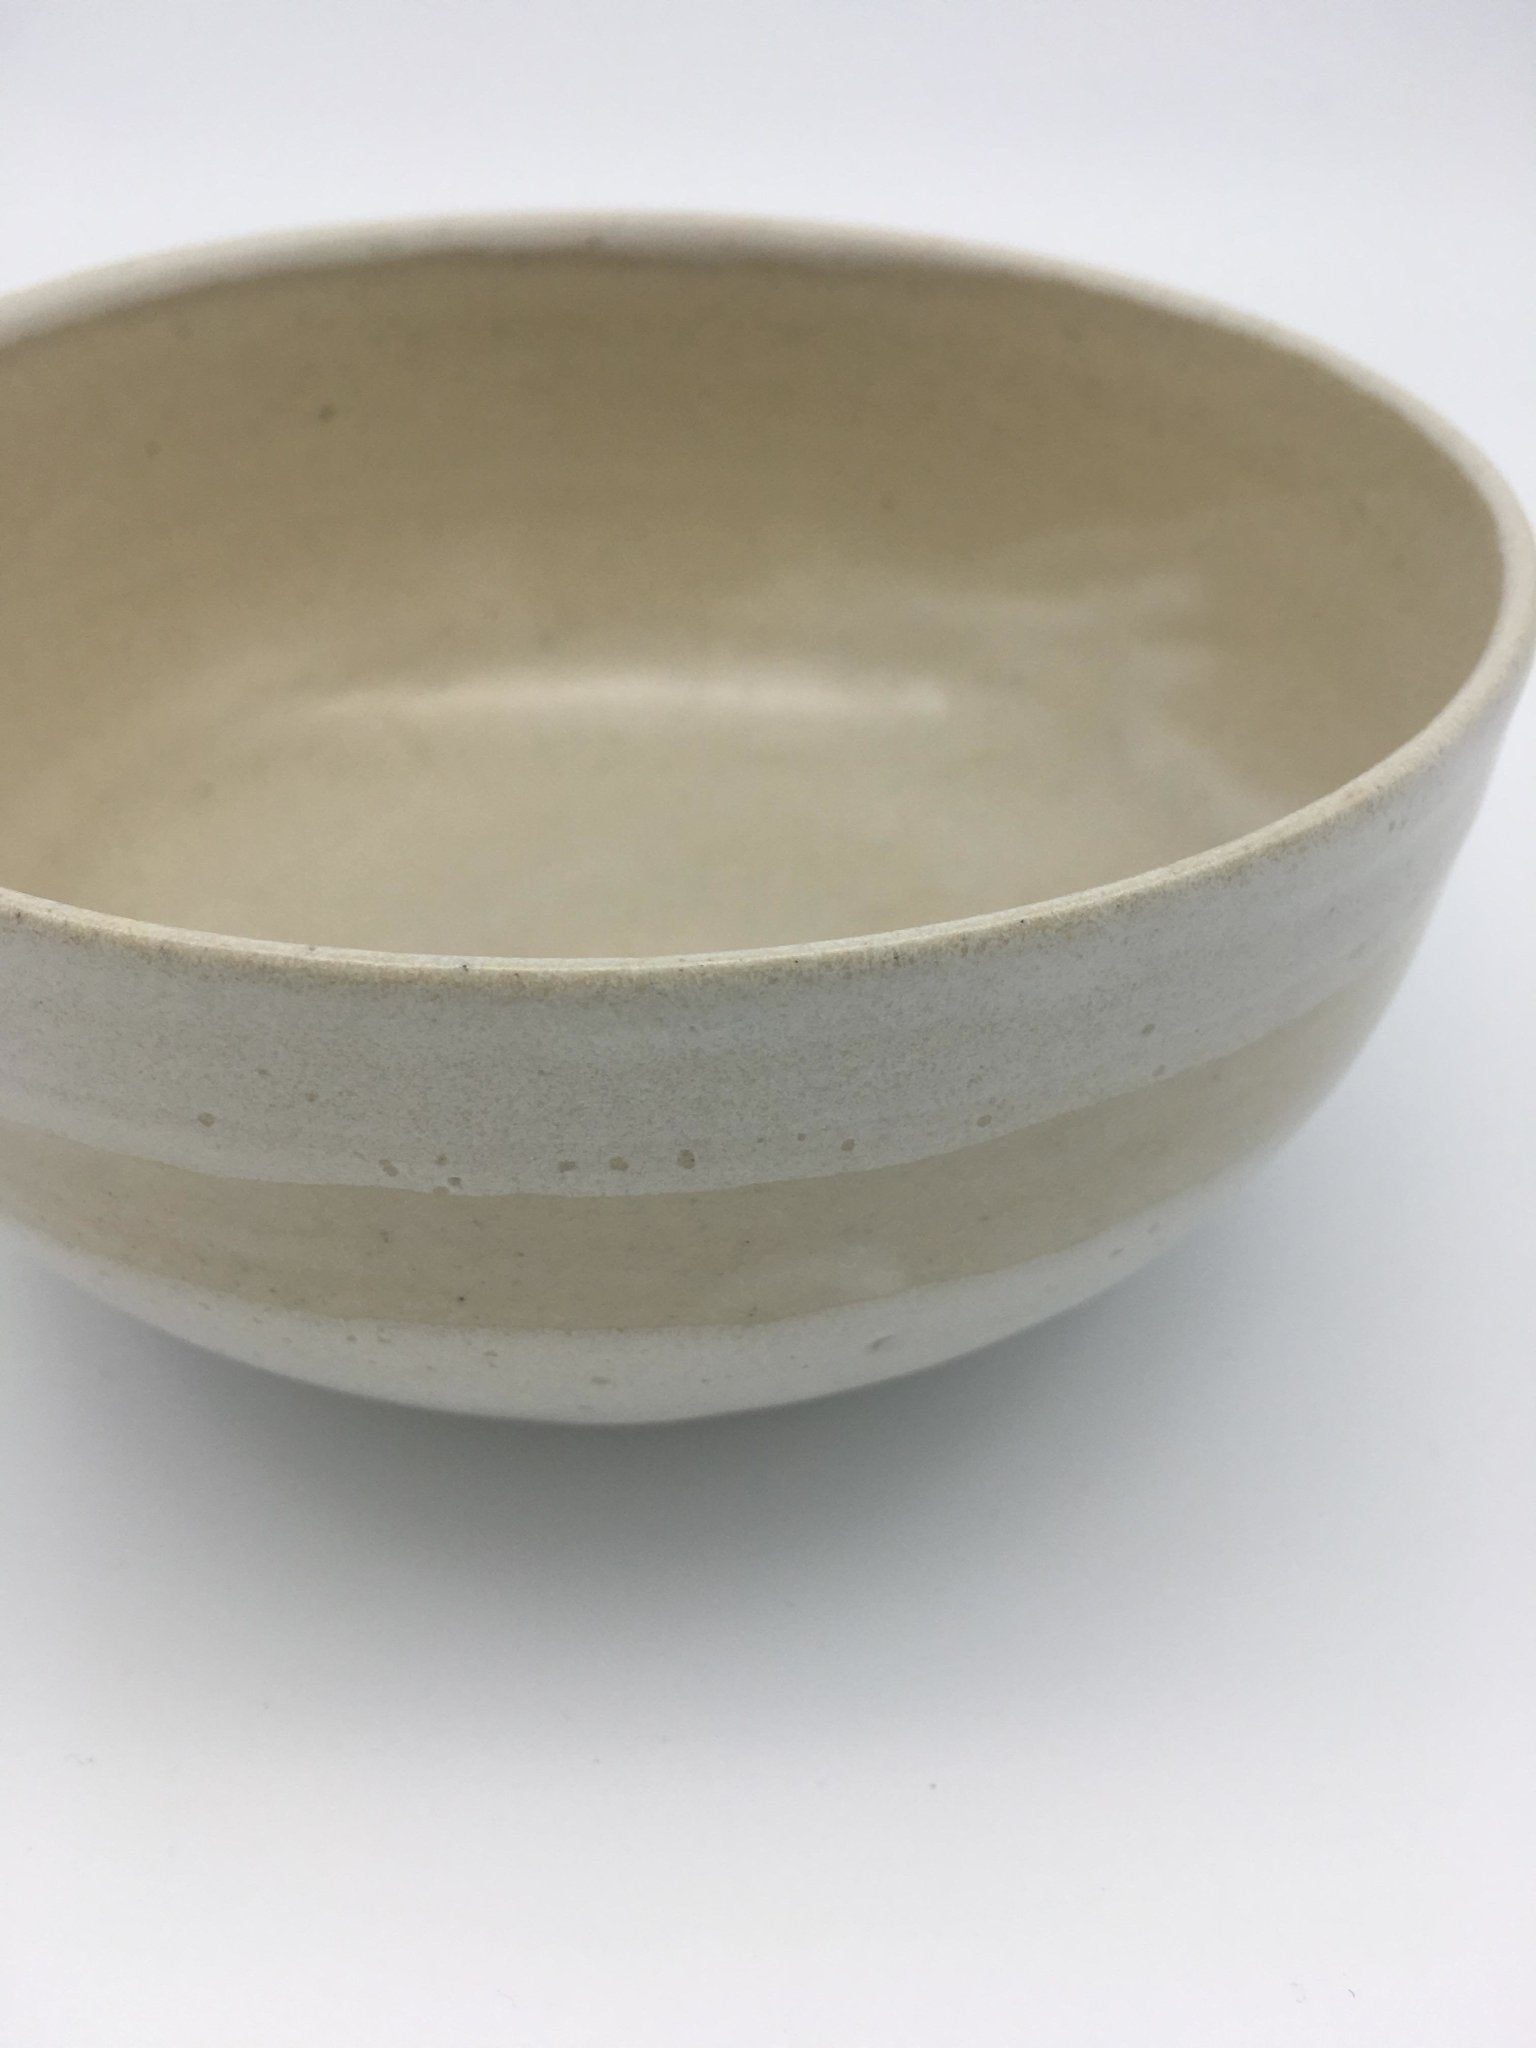 Hand thrown stoneware bowl - Natalia Willmott